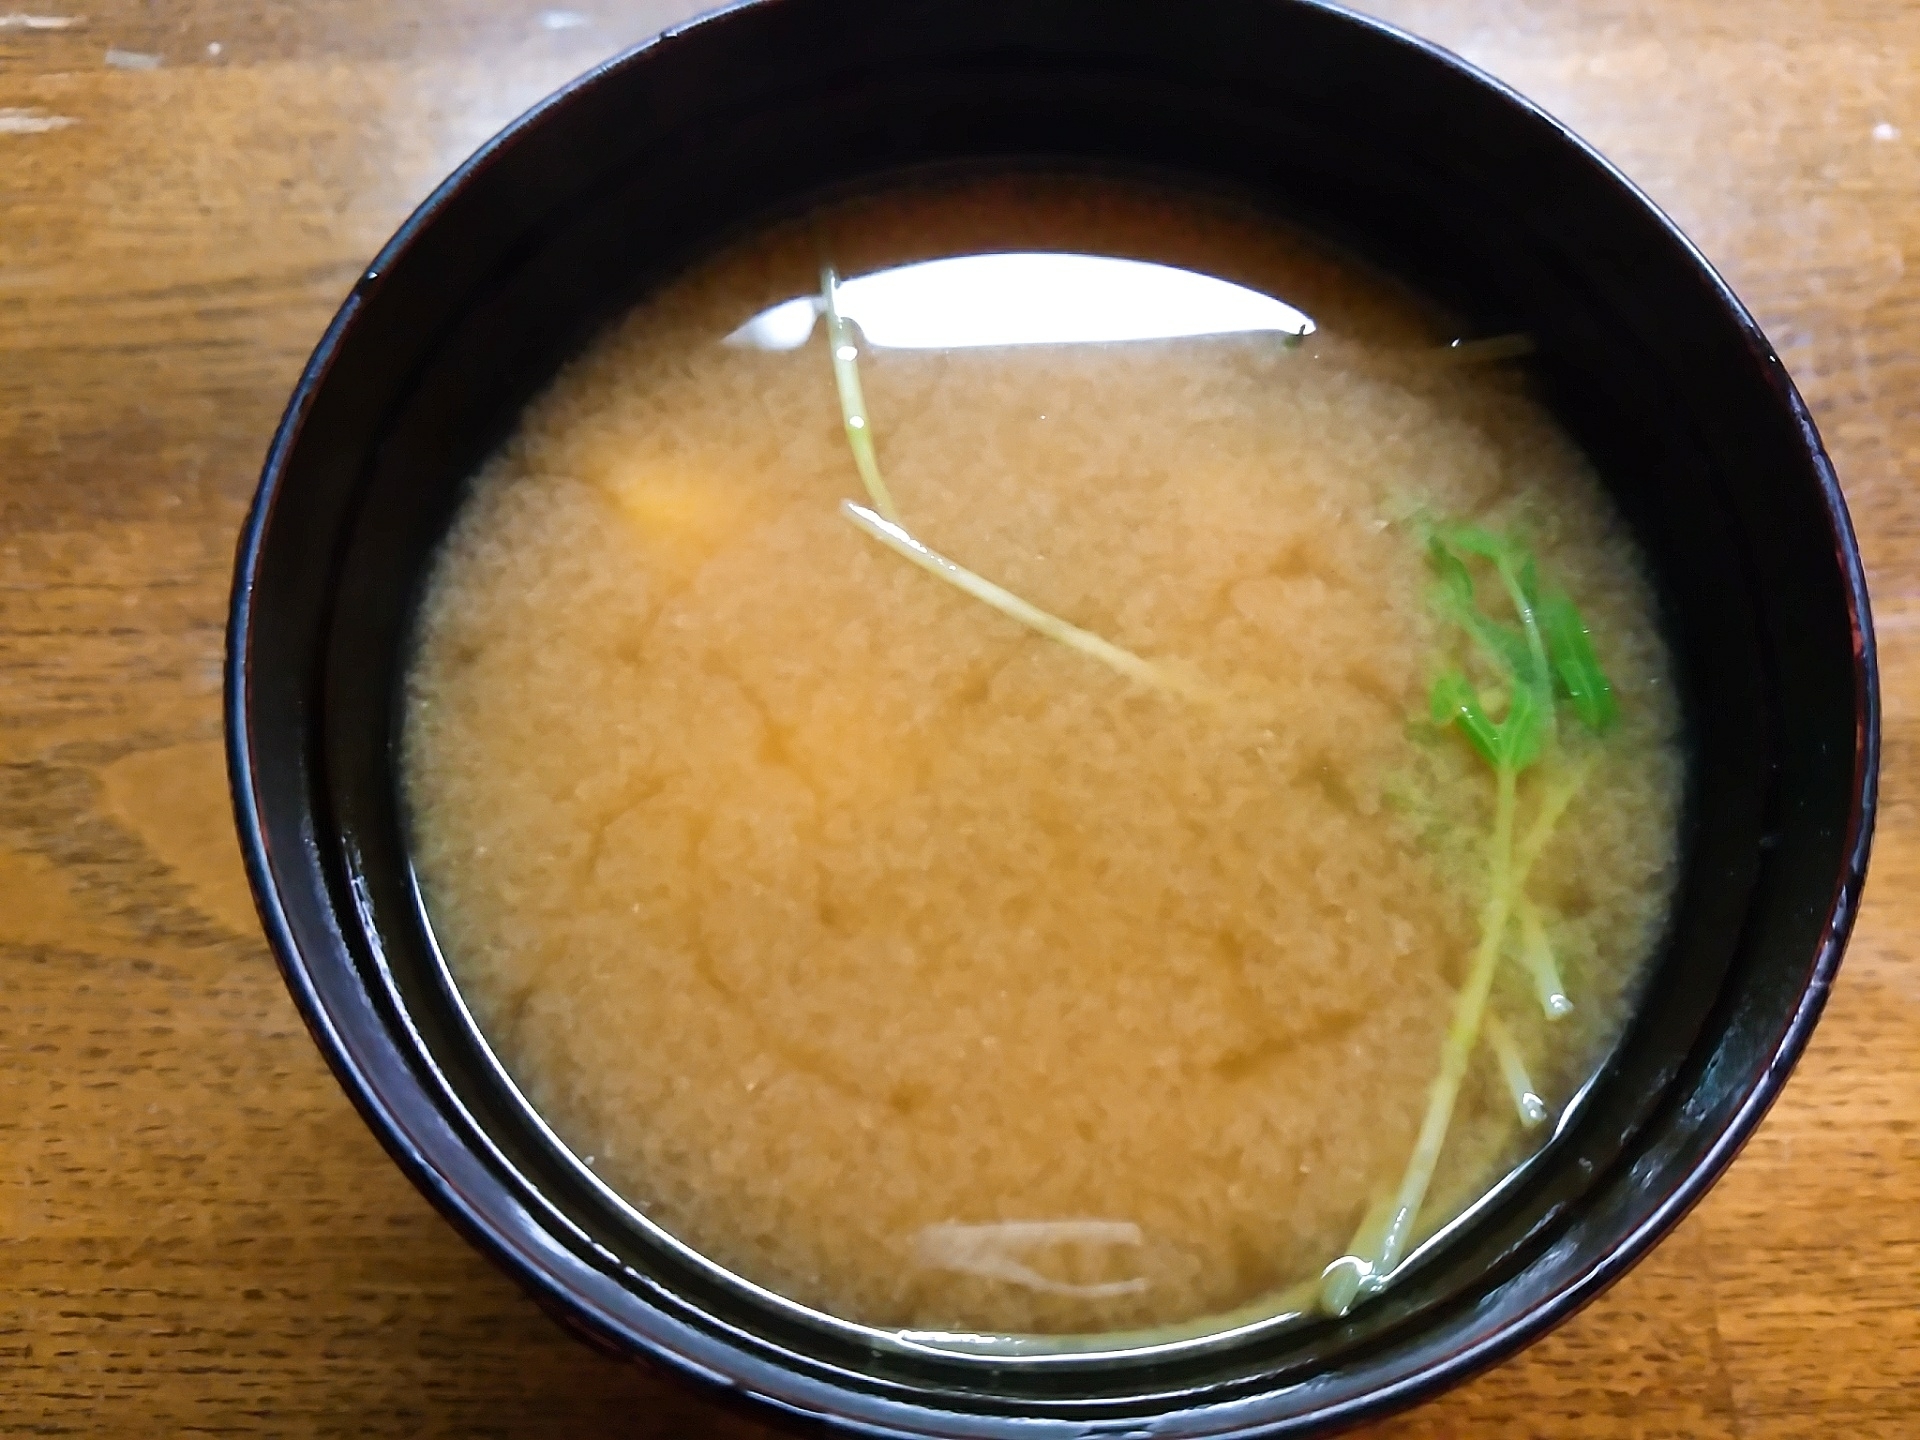 薩摩芋と空心菜新芽の味噌汁